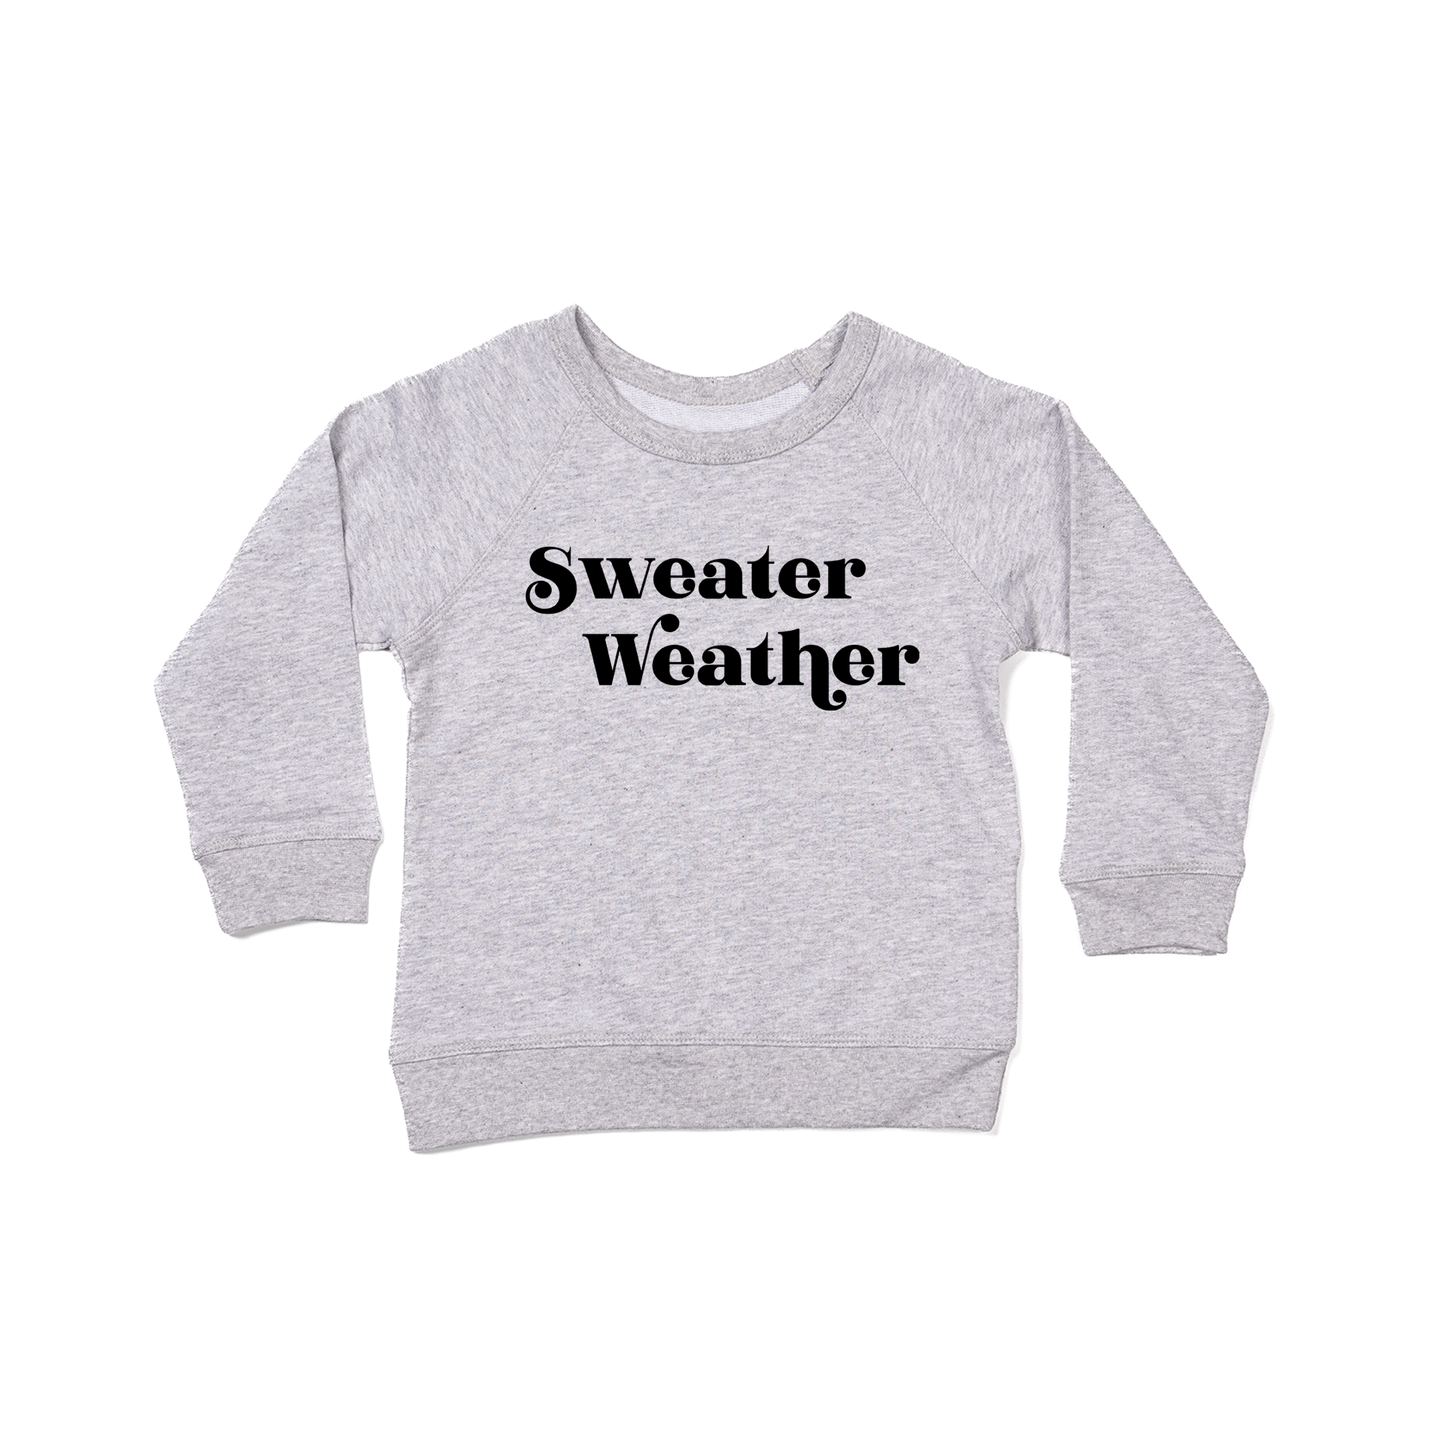 Sweater Weather (Black) - Kids Sweatshirt (Heather Gray)